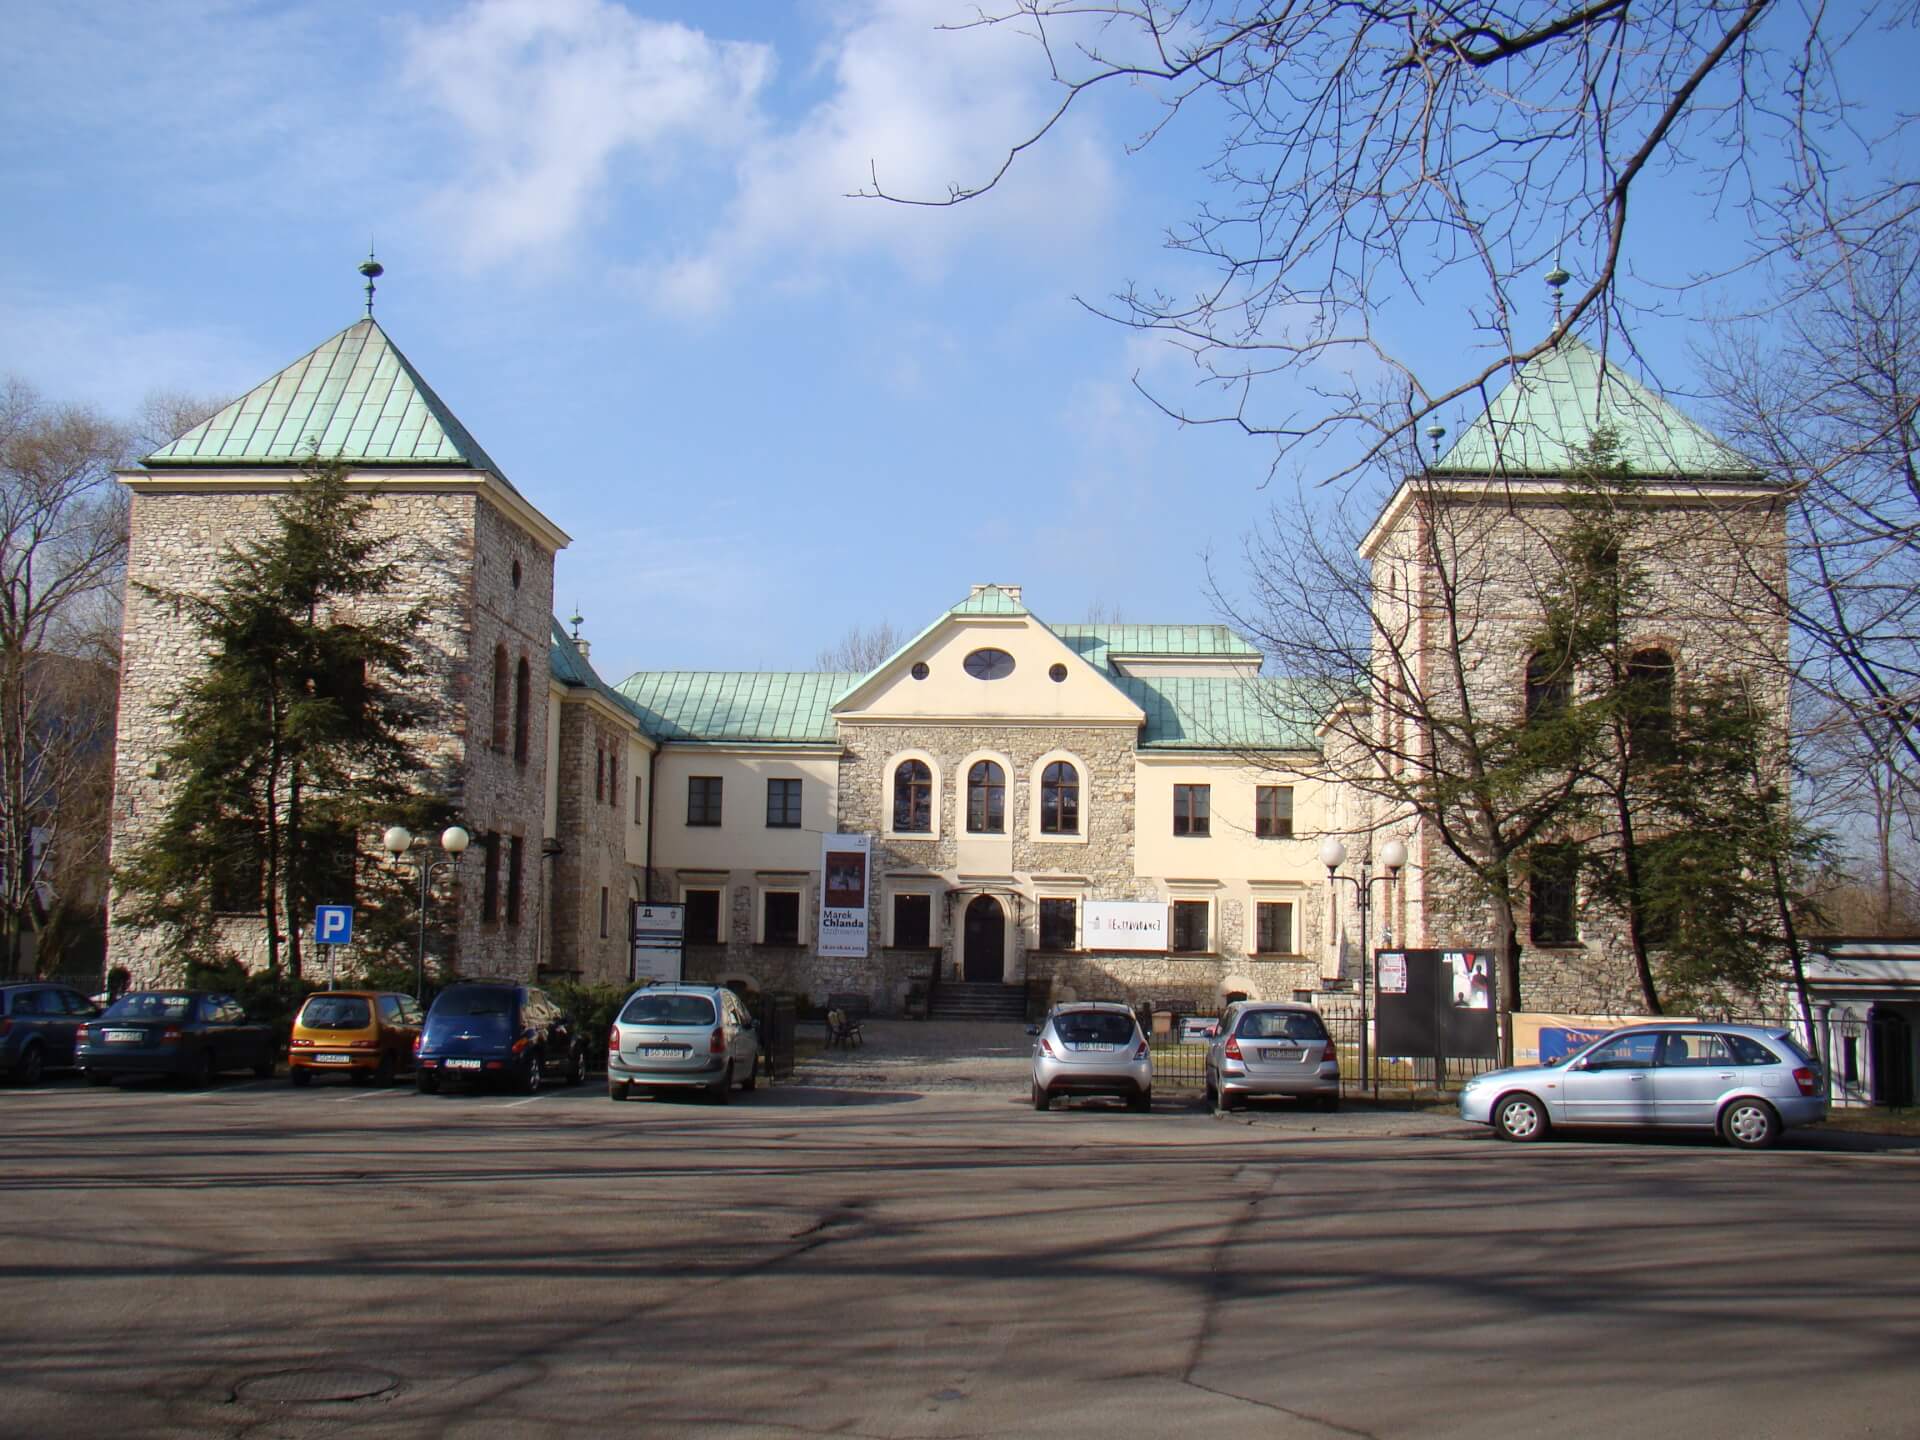 Zamek Sielecki Sosnowiec